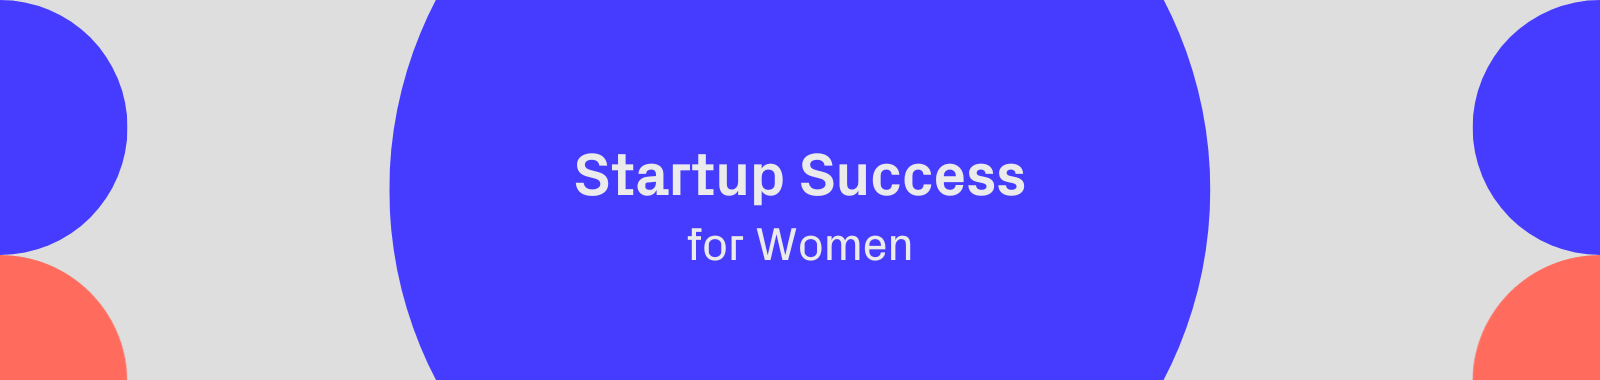 startup-success-for-women-web-banner